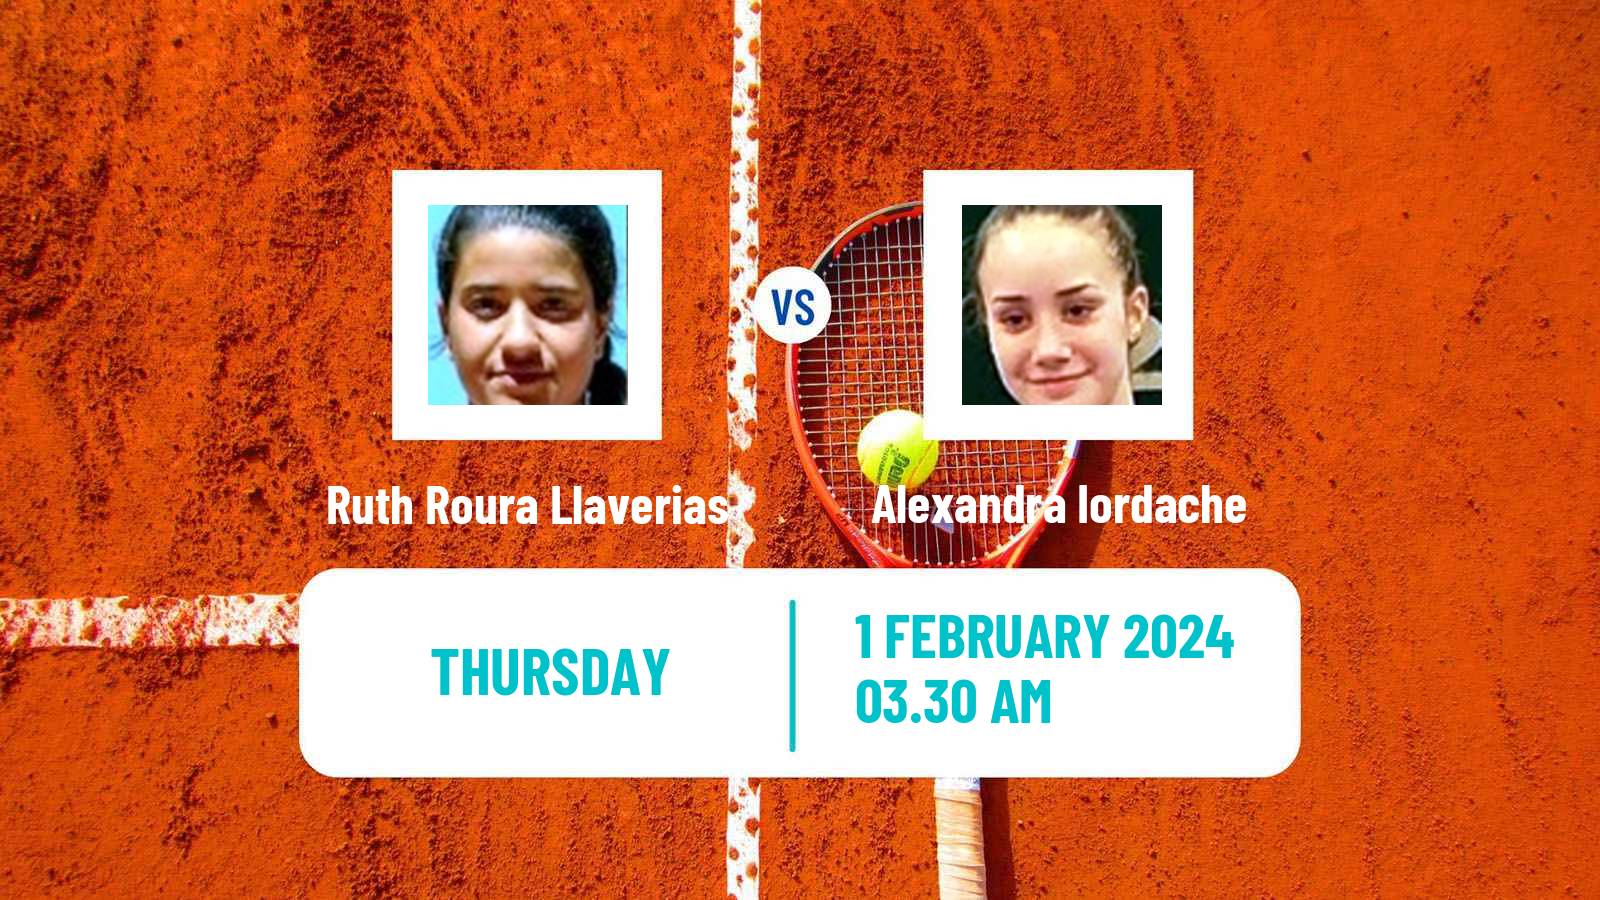 Tennis ITF W15 Monastir 3 Women Ruth Roura Llaverias - Alexandra Iordache